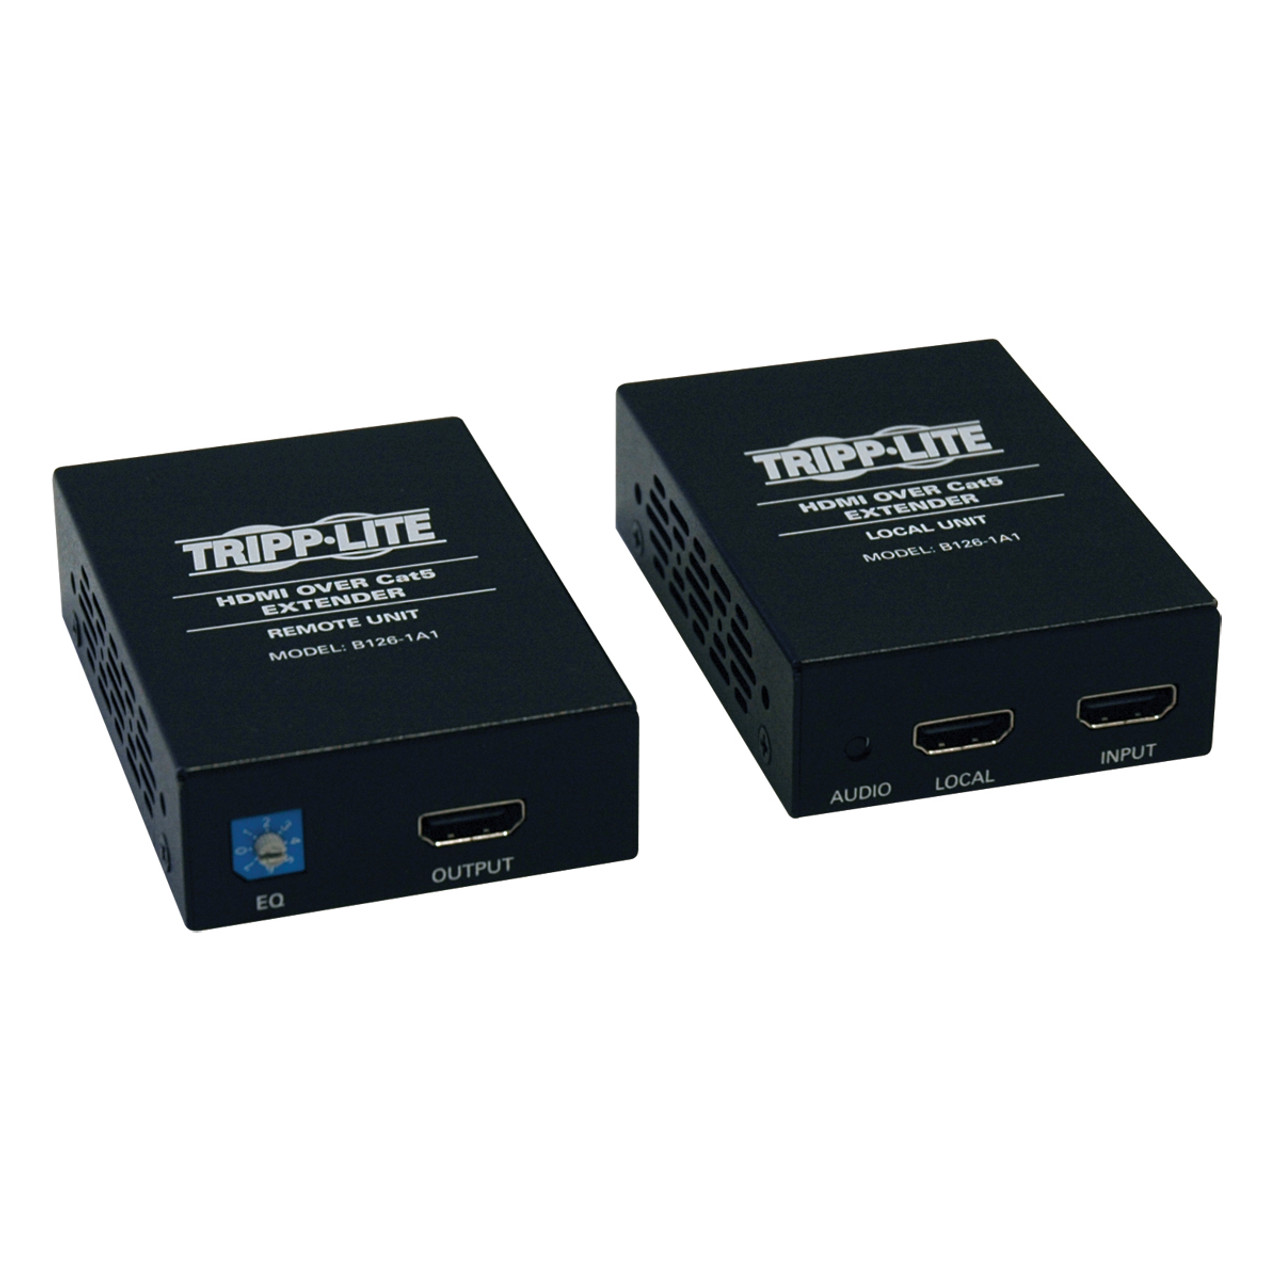 Tripp Lite B126-1A1 HDMI video splitter